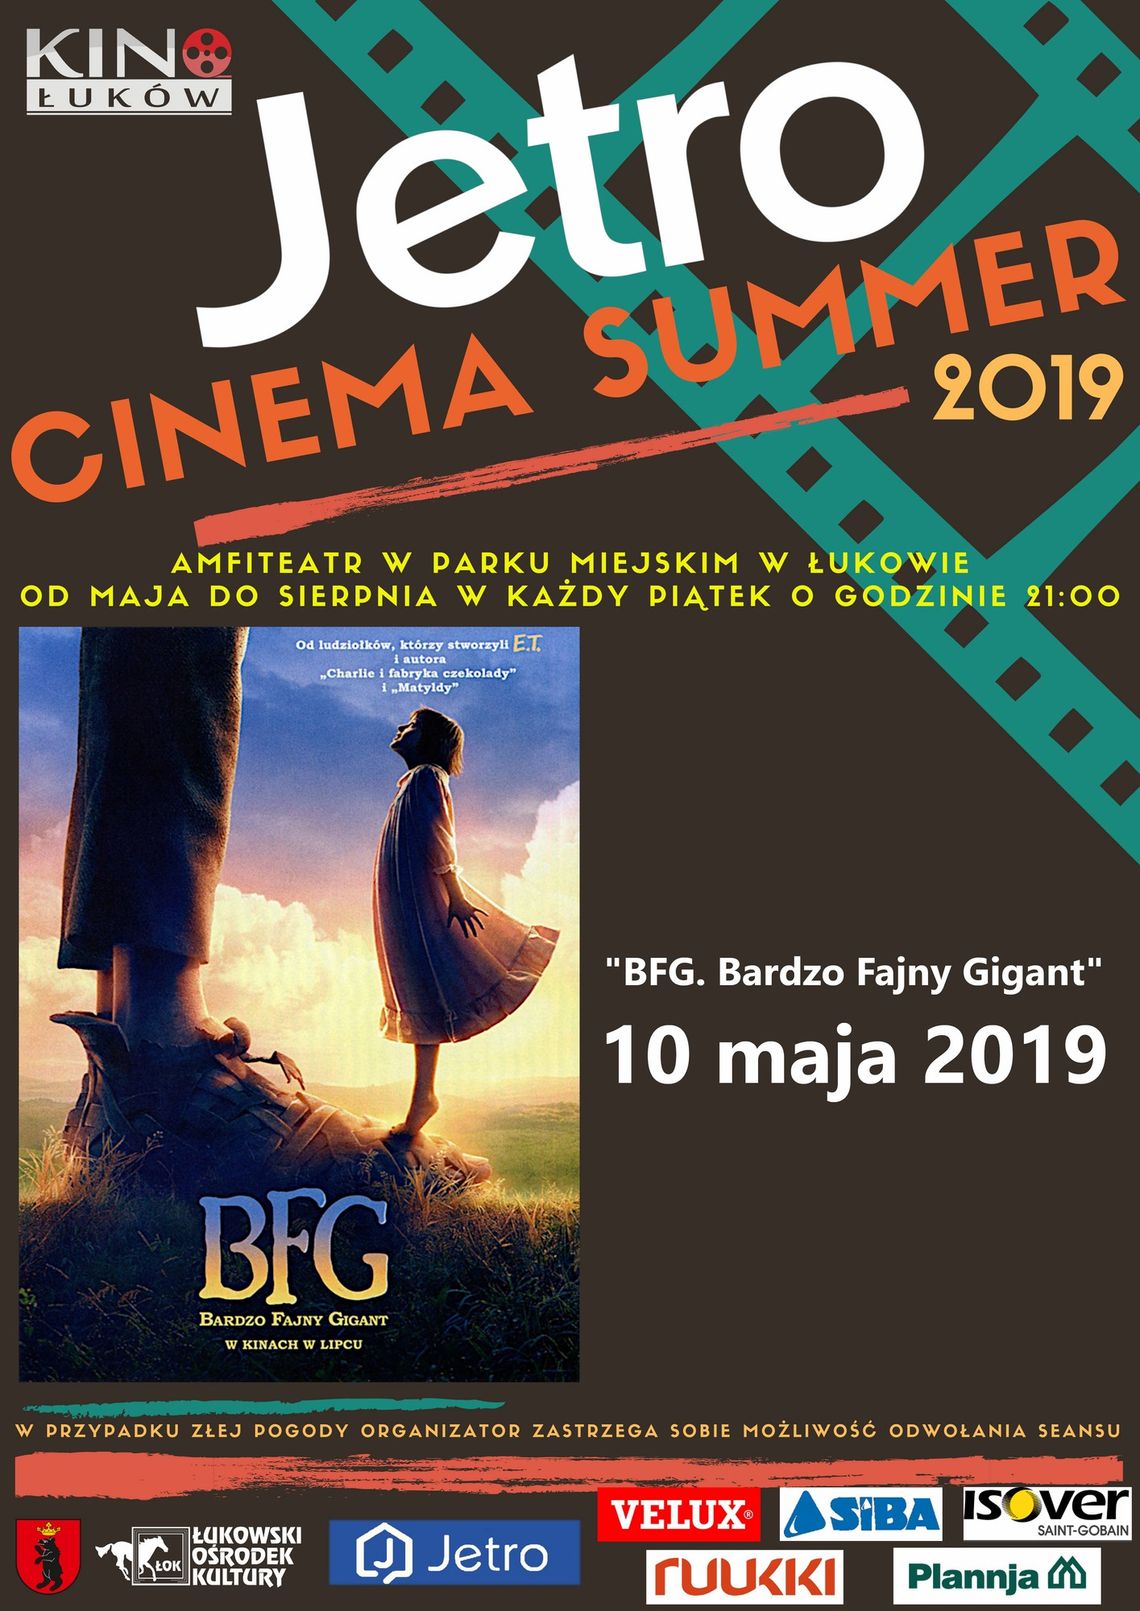 Jetro Cinema Summer 2019 "BFG: Bardzo Fajny Gigant /10 maja 2019